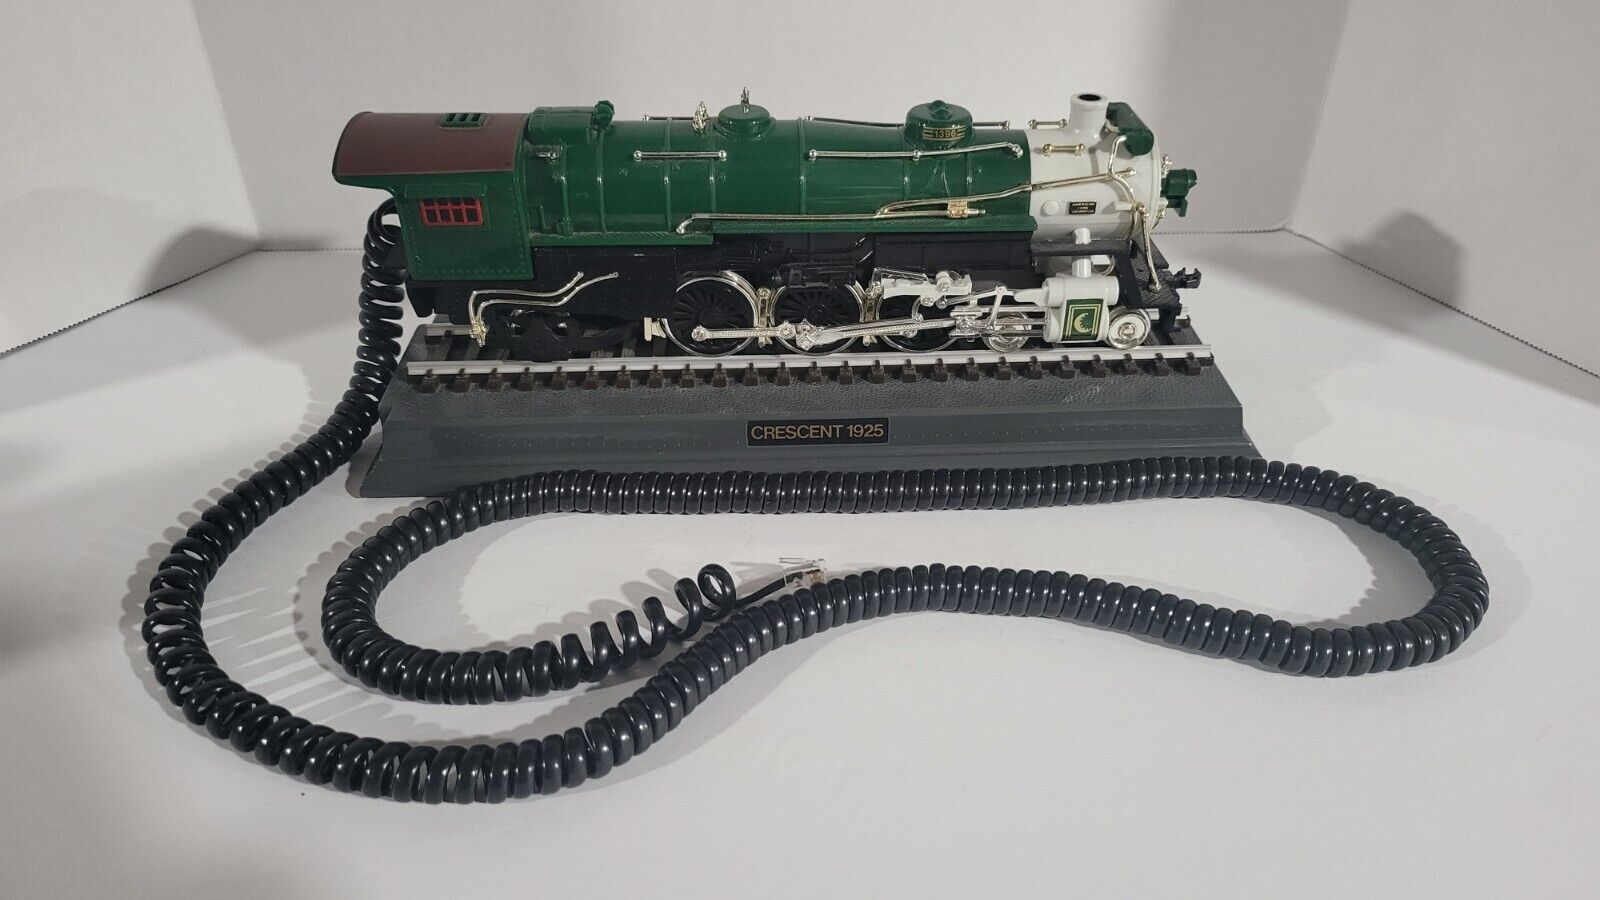 Vintage Telemania Crescent Train 1925 Locomotive Telephone